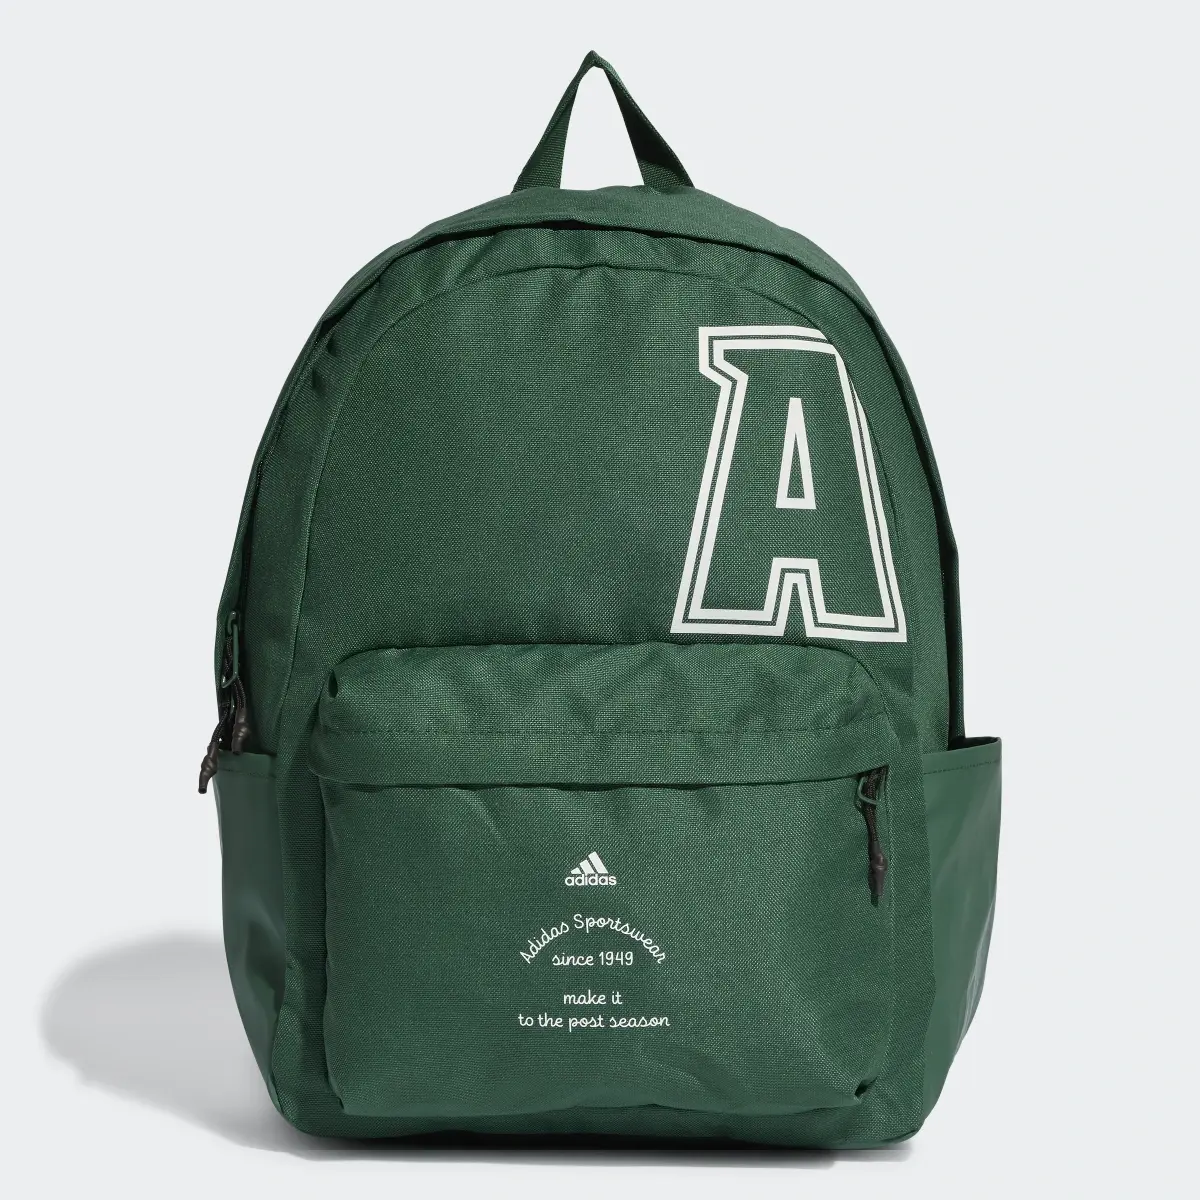 Adidas Classic Brand Love Initial Print Backpack. 2